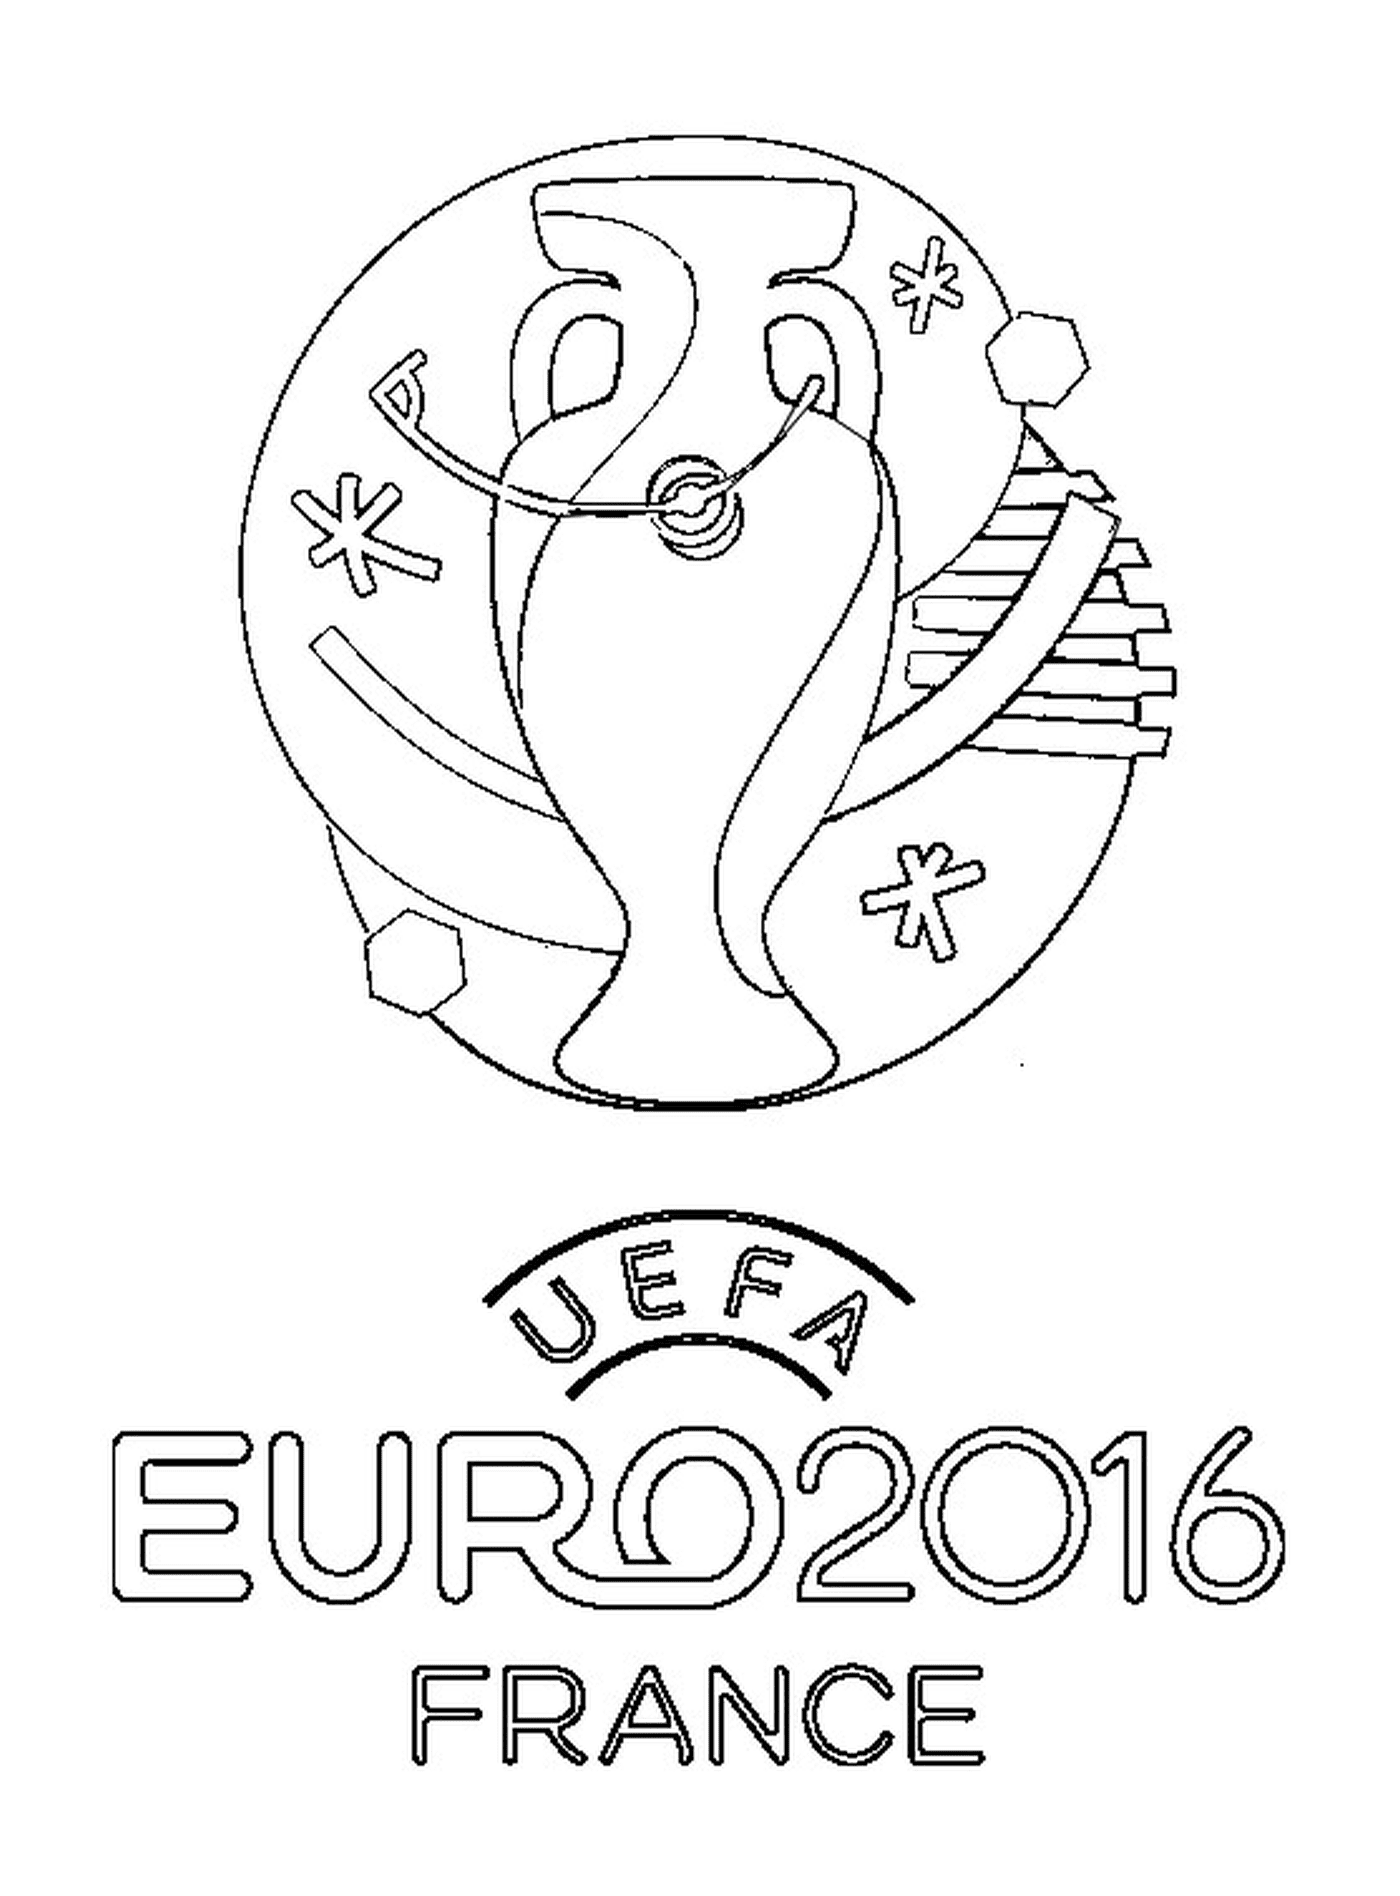   Logo de l'Euro 2016 en France 